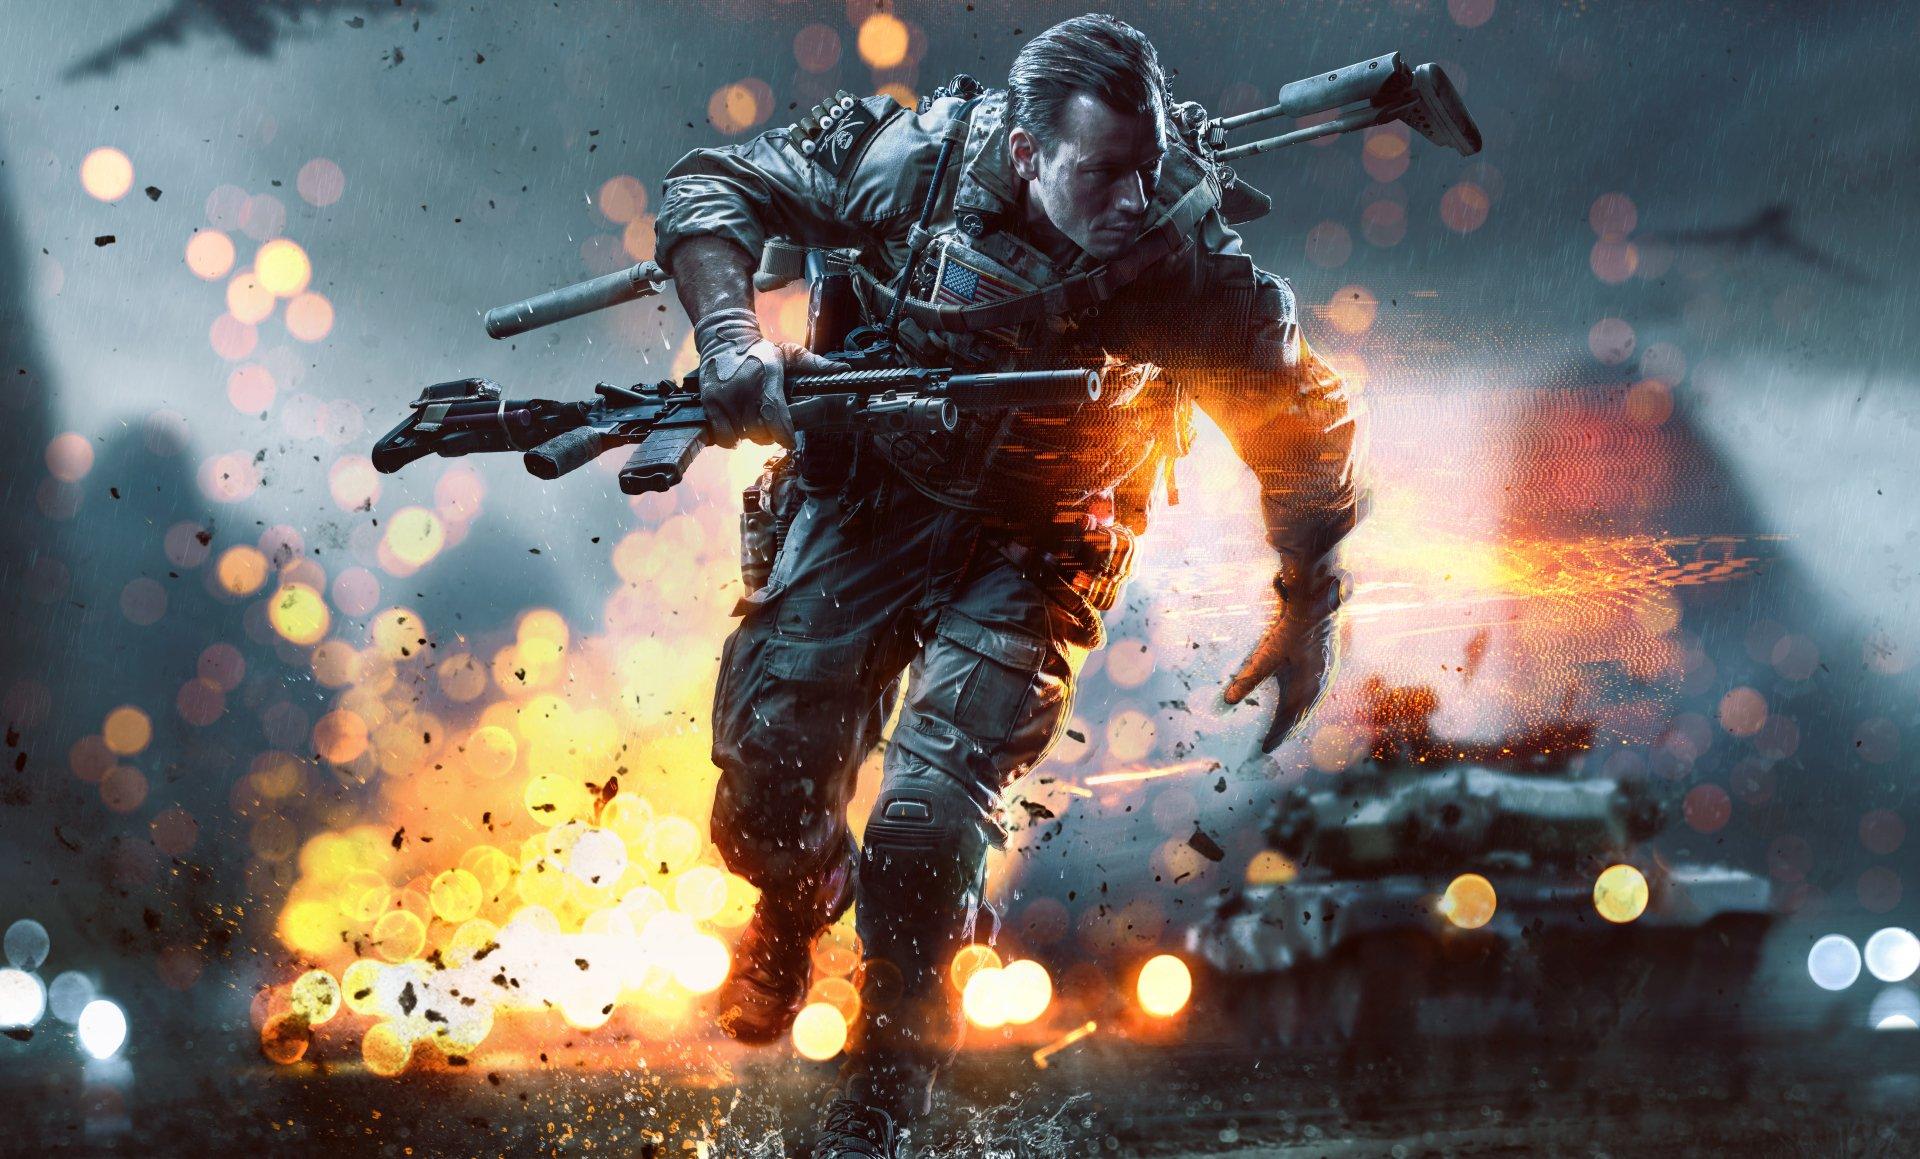 4K Ultra HD Battlefield 4 Wallpaper and Background Image